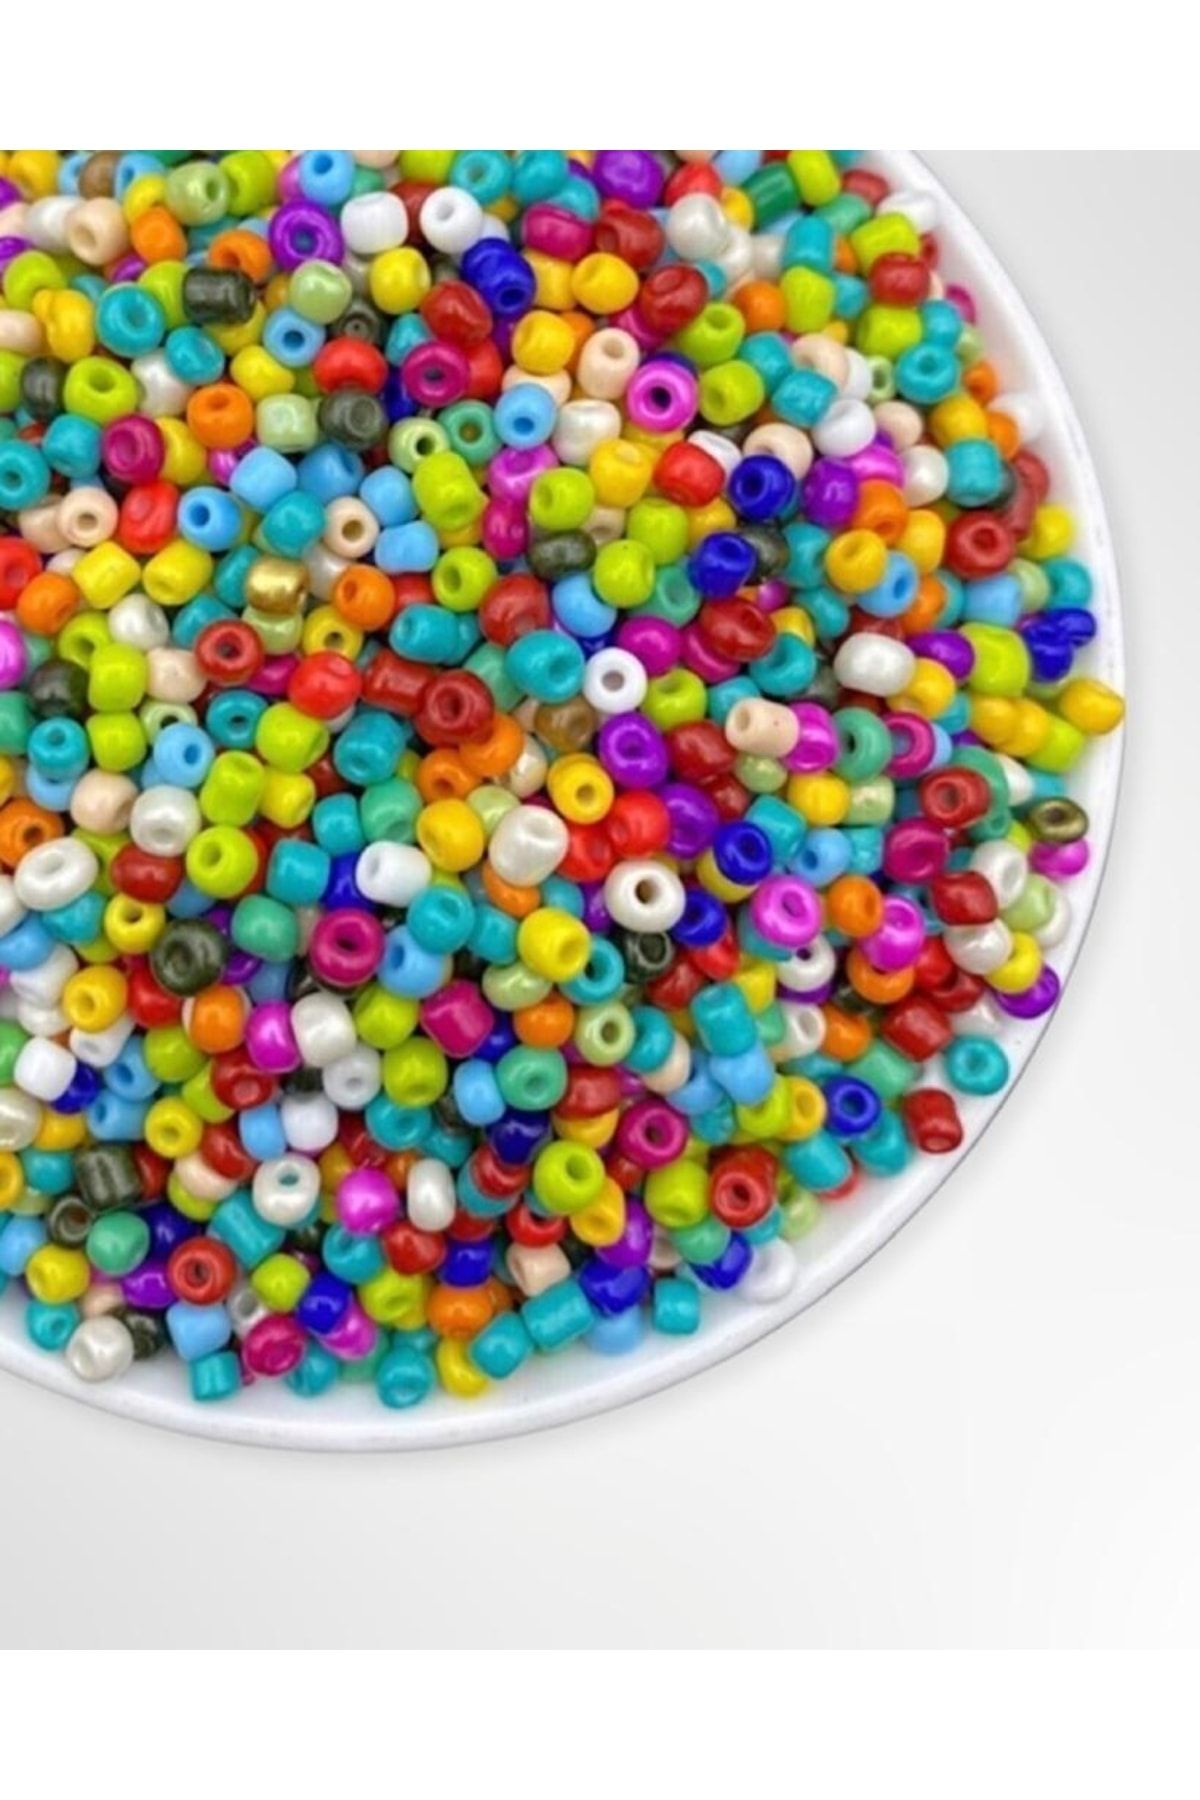 Flea Market 500 Adet Karışık Renk Cam Kum Boncuk , Takı Yapım Boncuğu - Mix